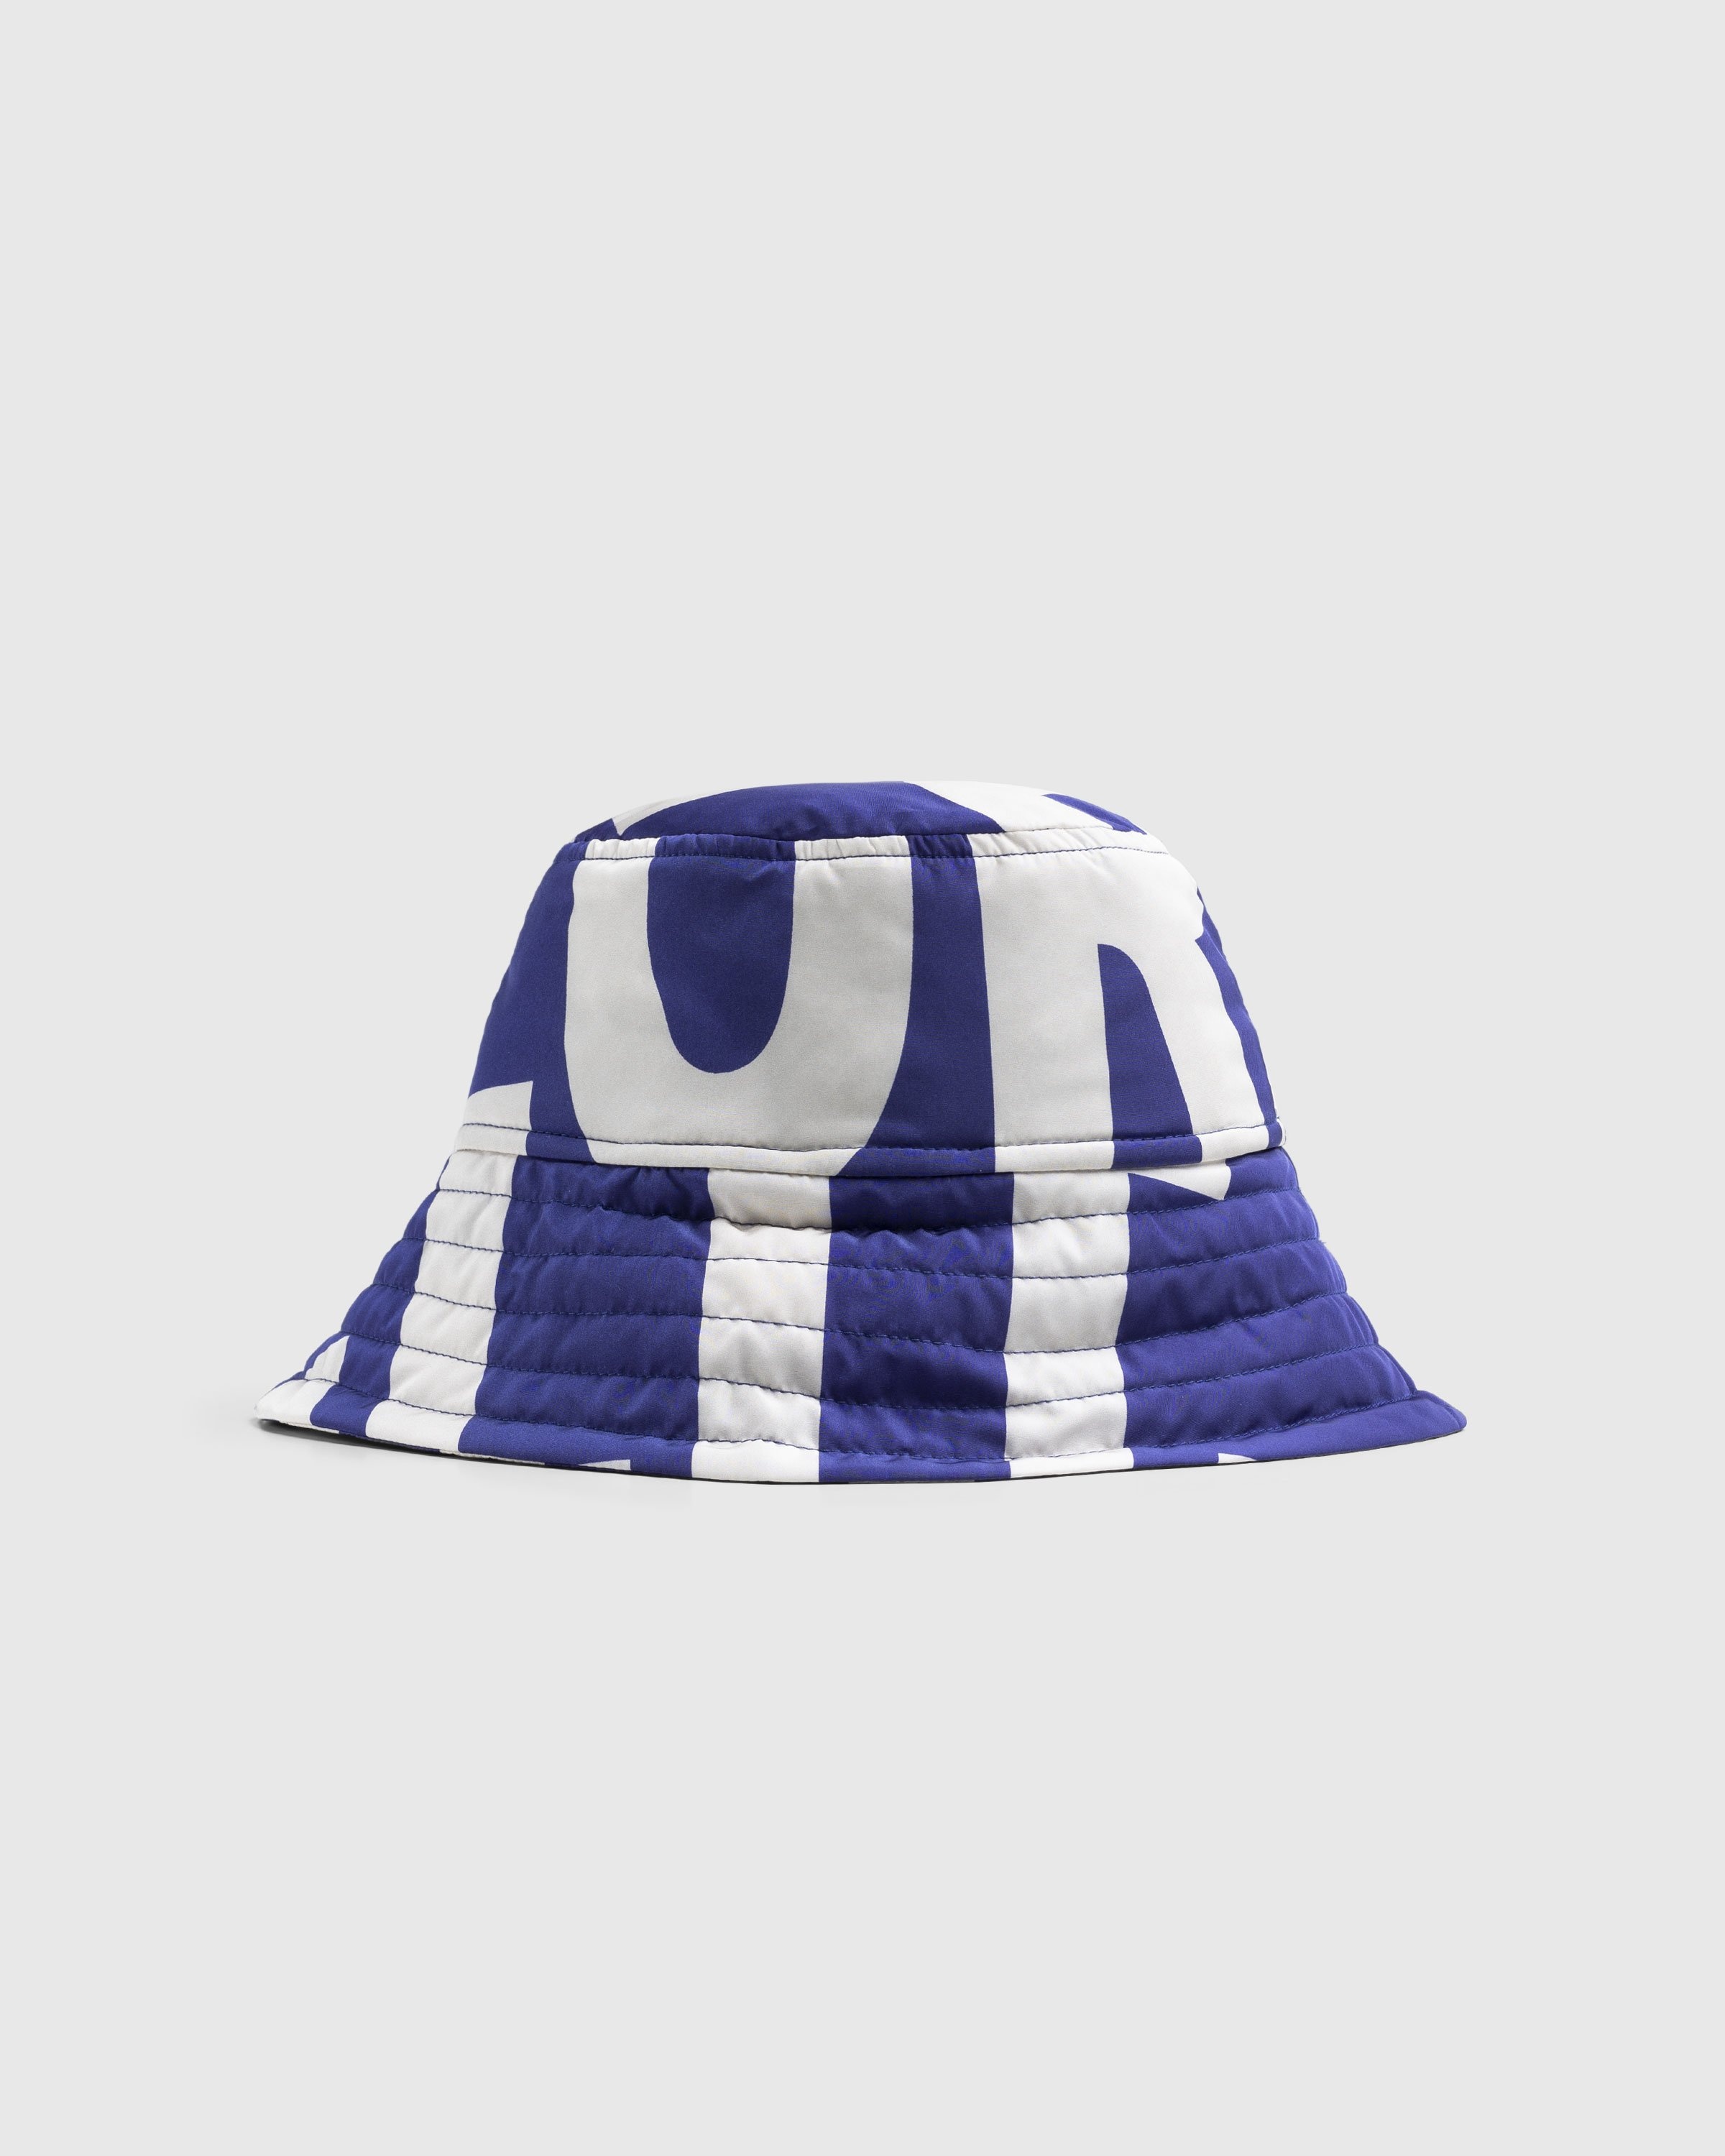 Dries van Noten – Gilly Hat Blue - Hats - Blue - Image 1